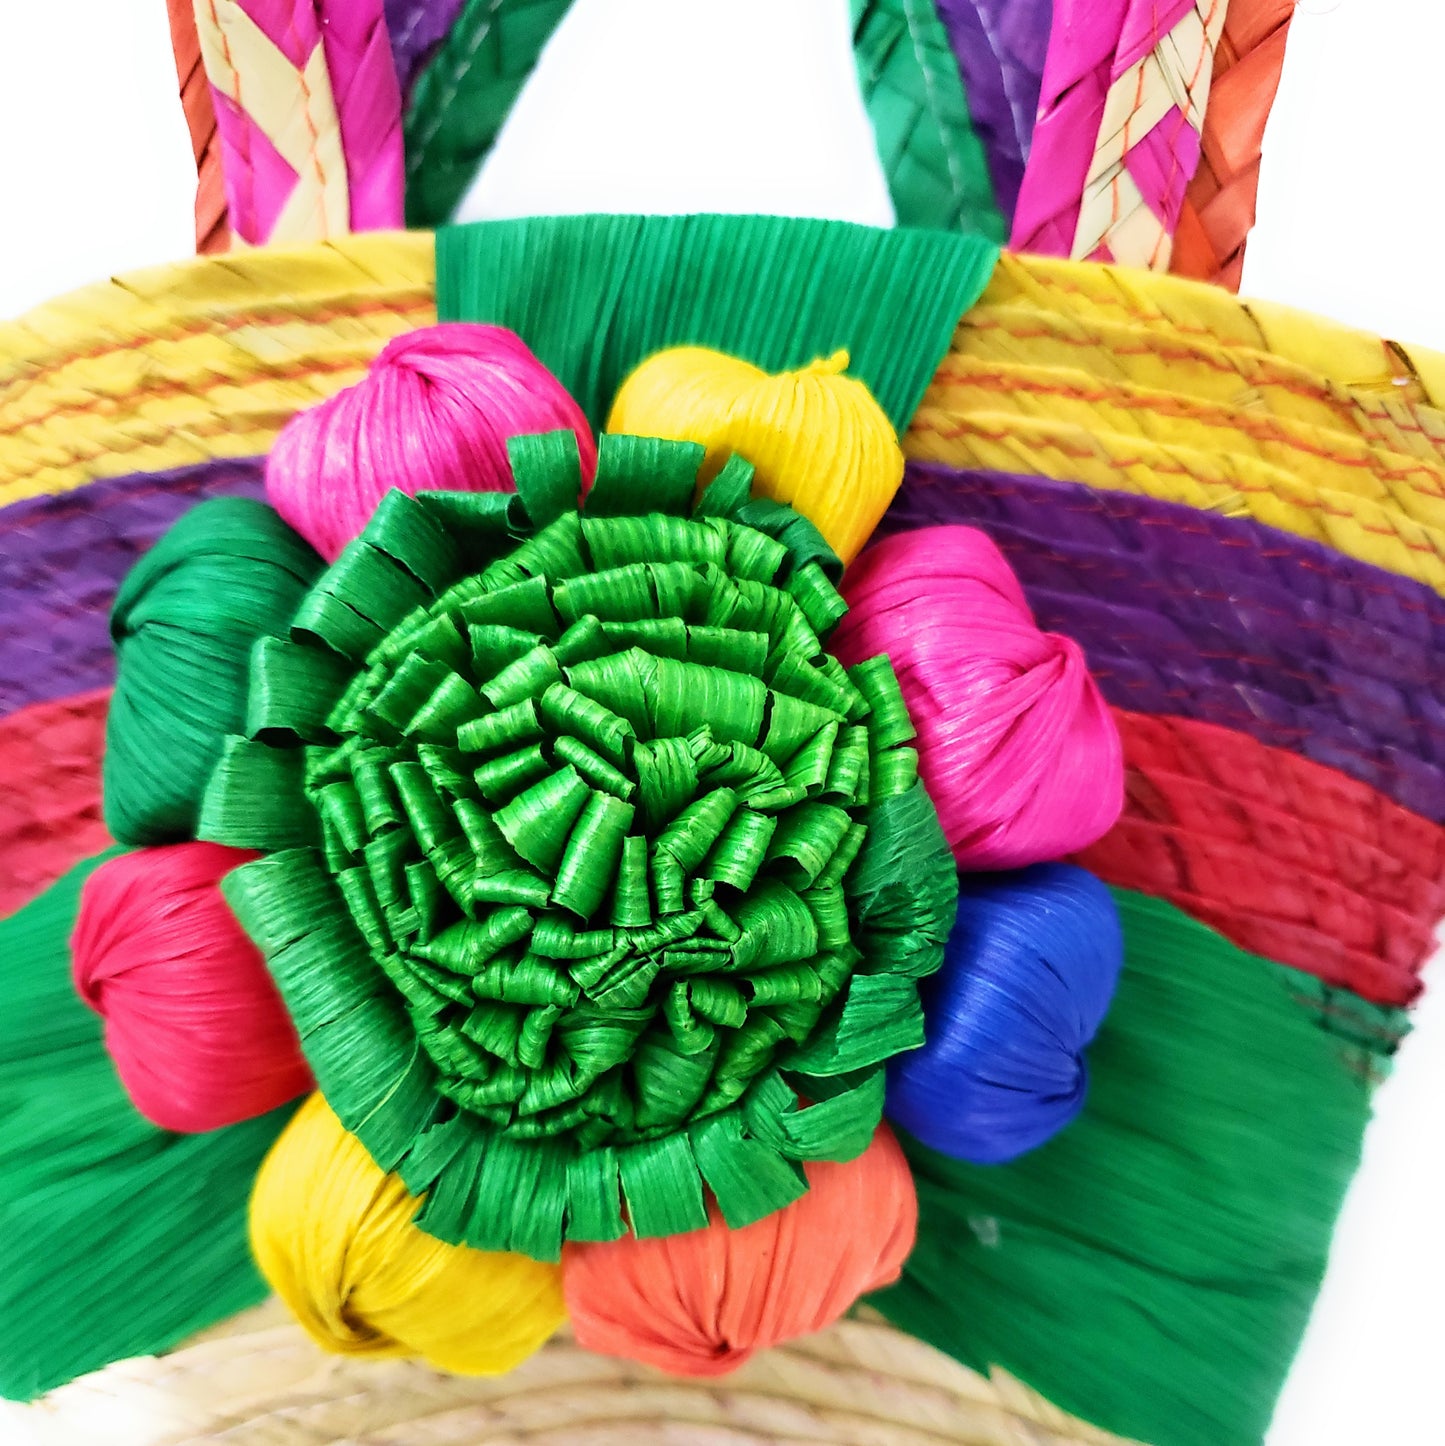 Mexican Floral Palm Bag  Handmade  Candy Bag Flower Straw Bag